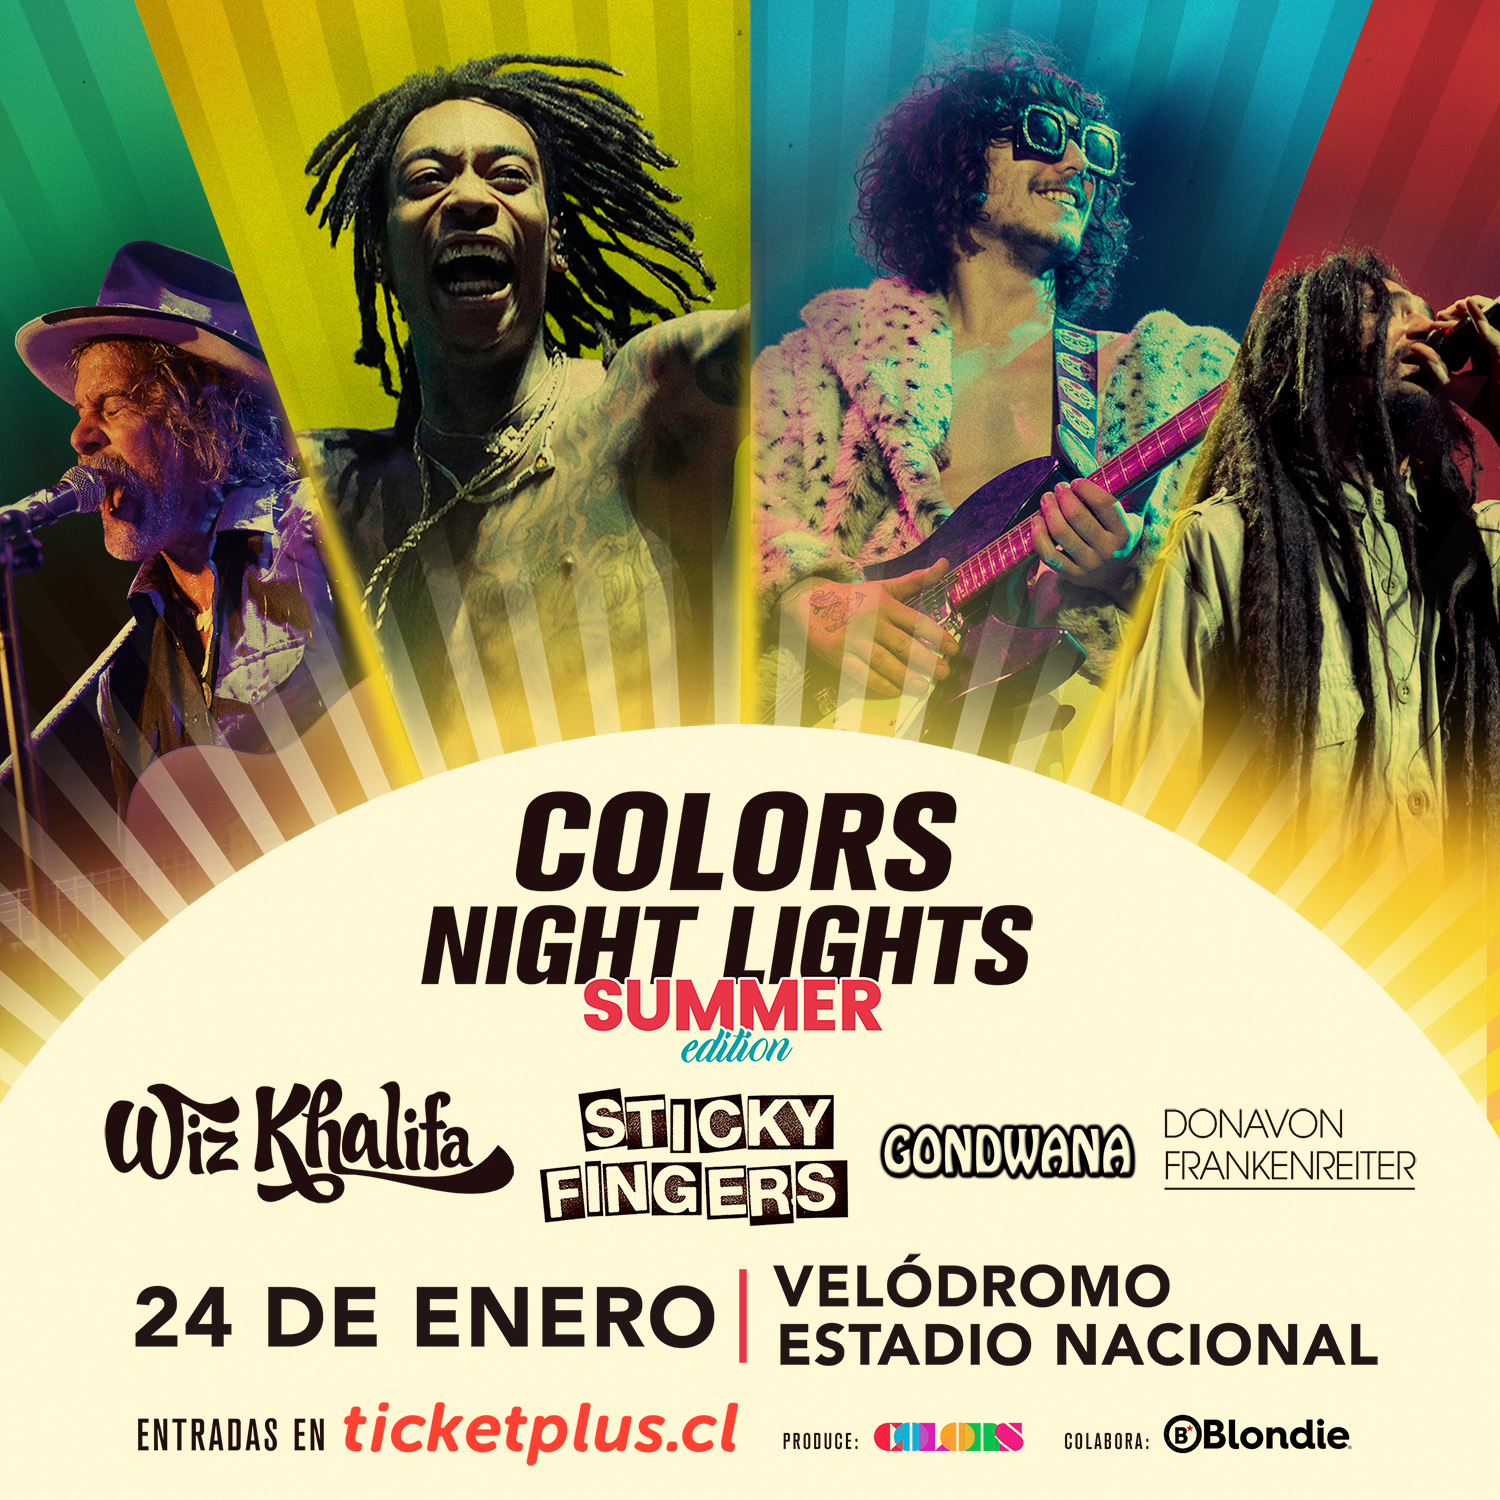 Colors Night Lights Summer Edition,